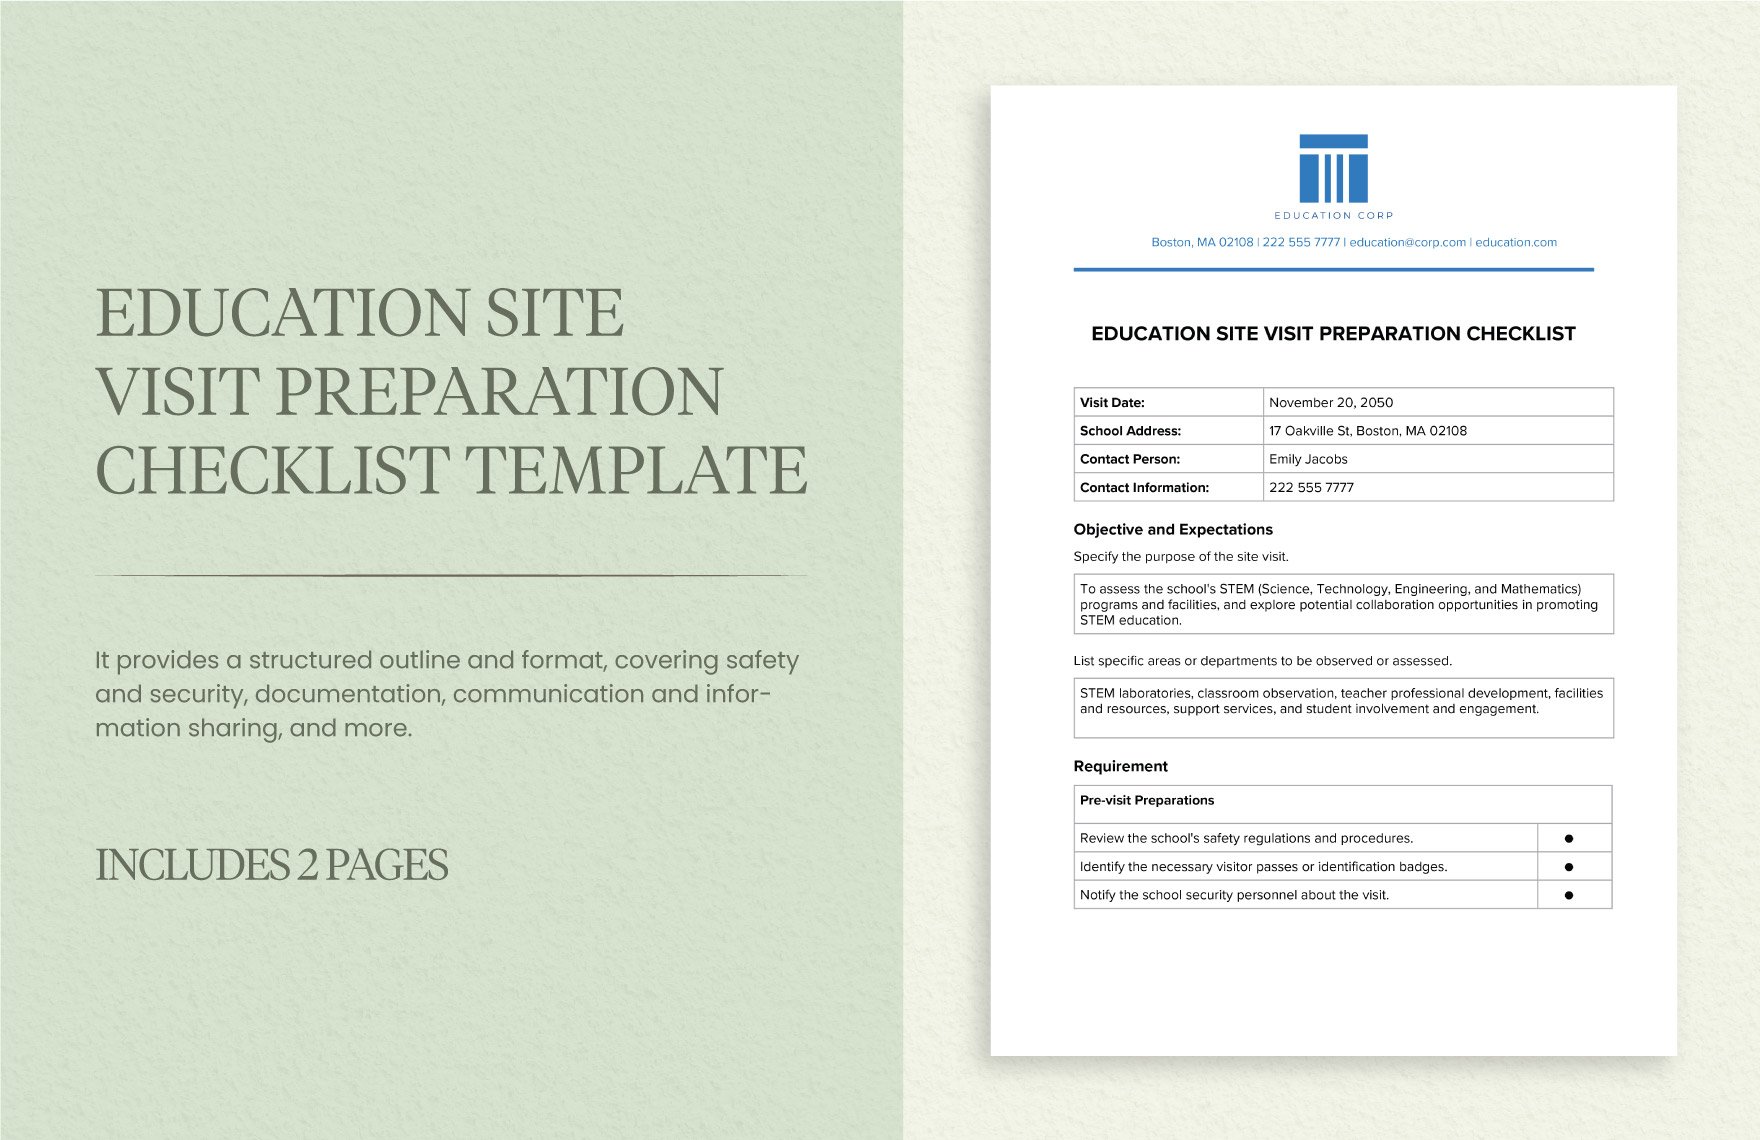 Education Site Visit Preparation Checklist Template in Word, Google Docs, PDF